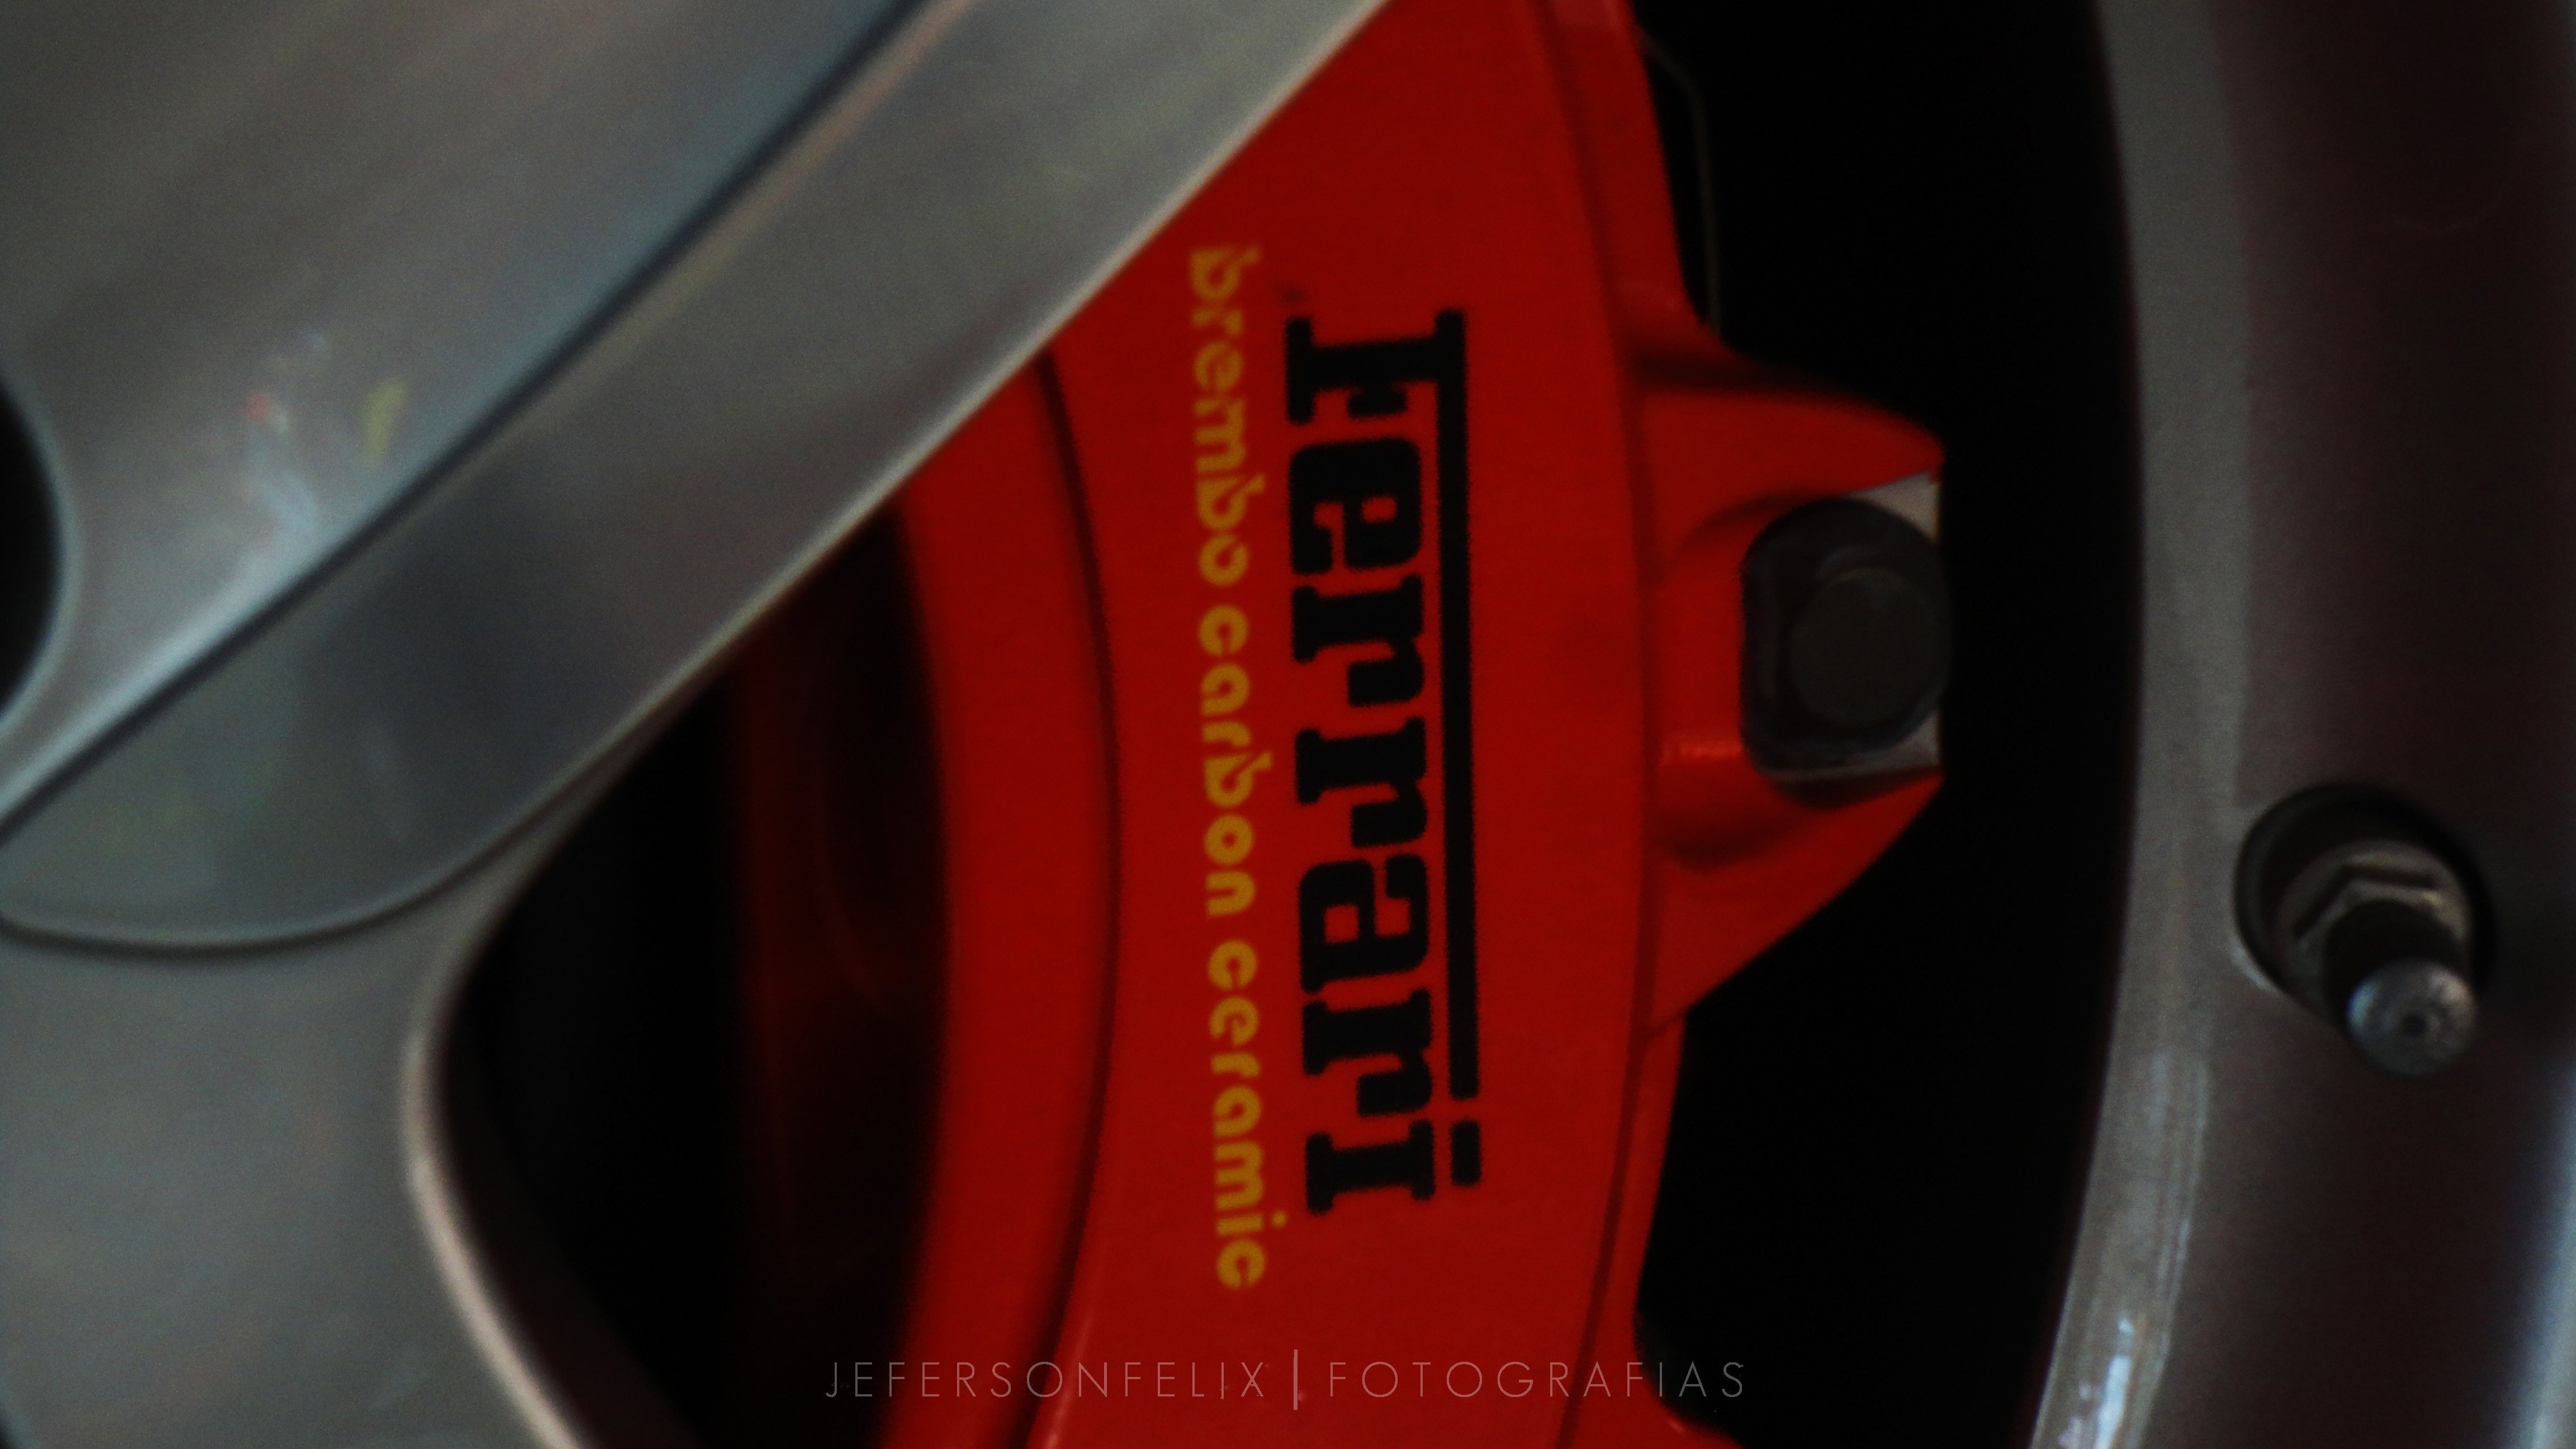 Ferrari FF, car, red, text, communication, close-up, no people